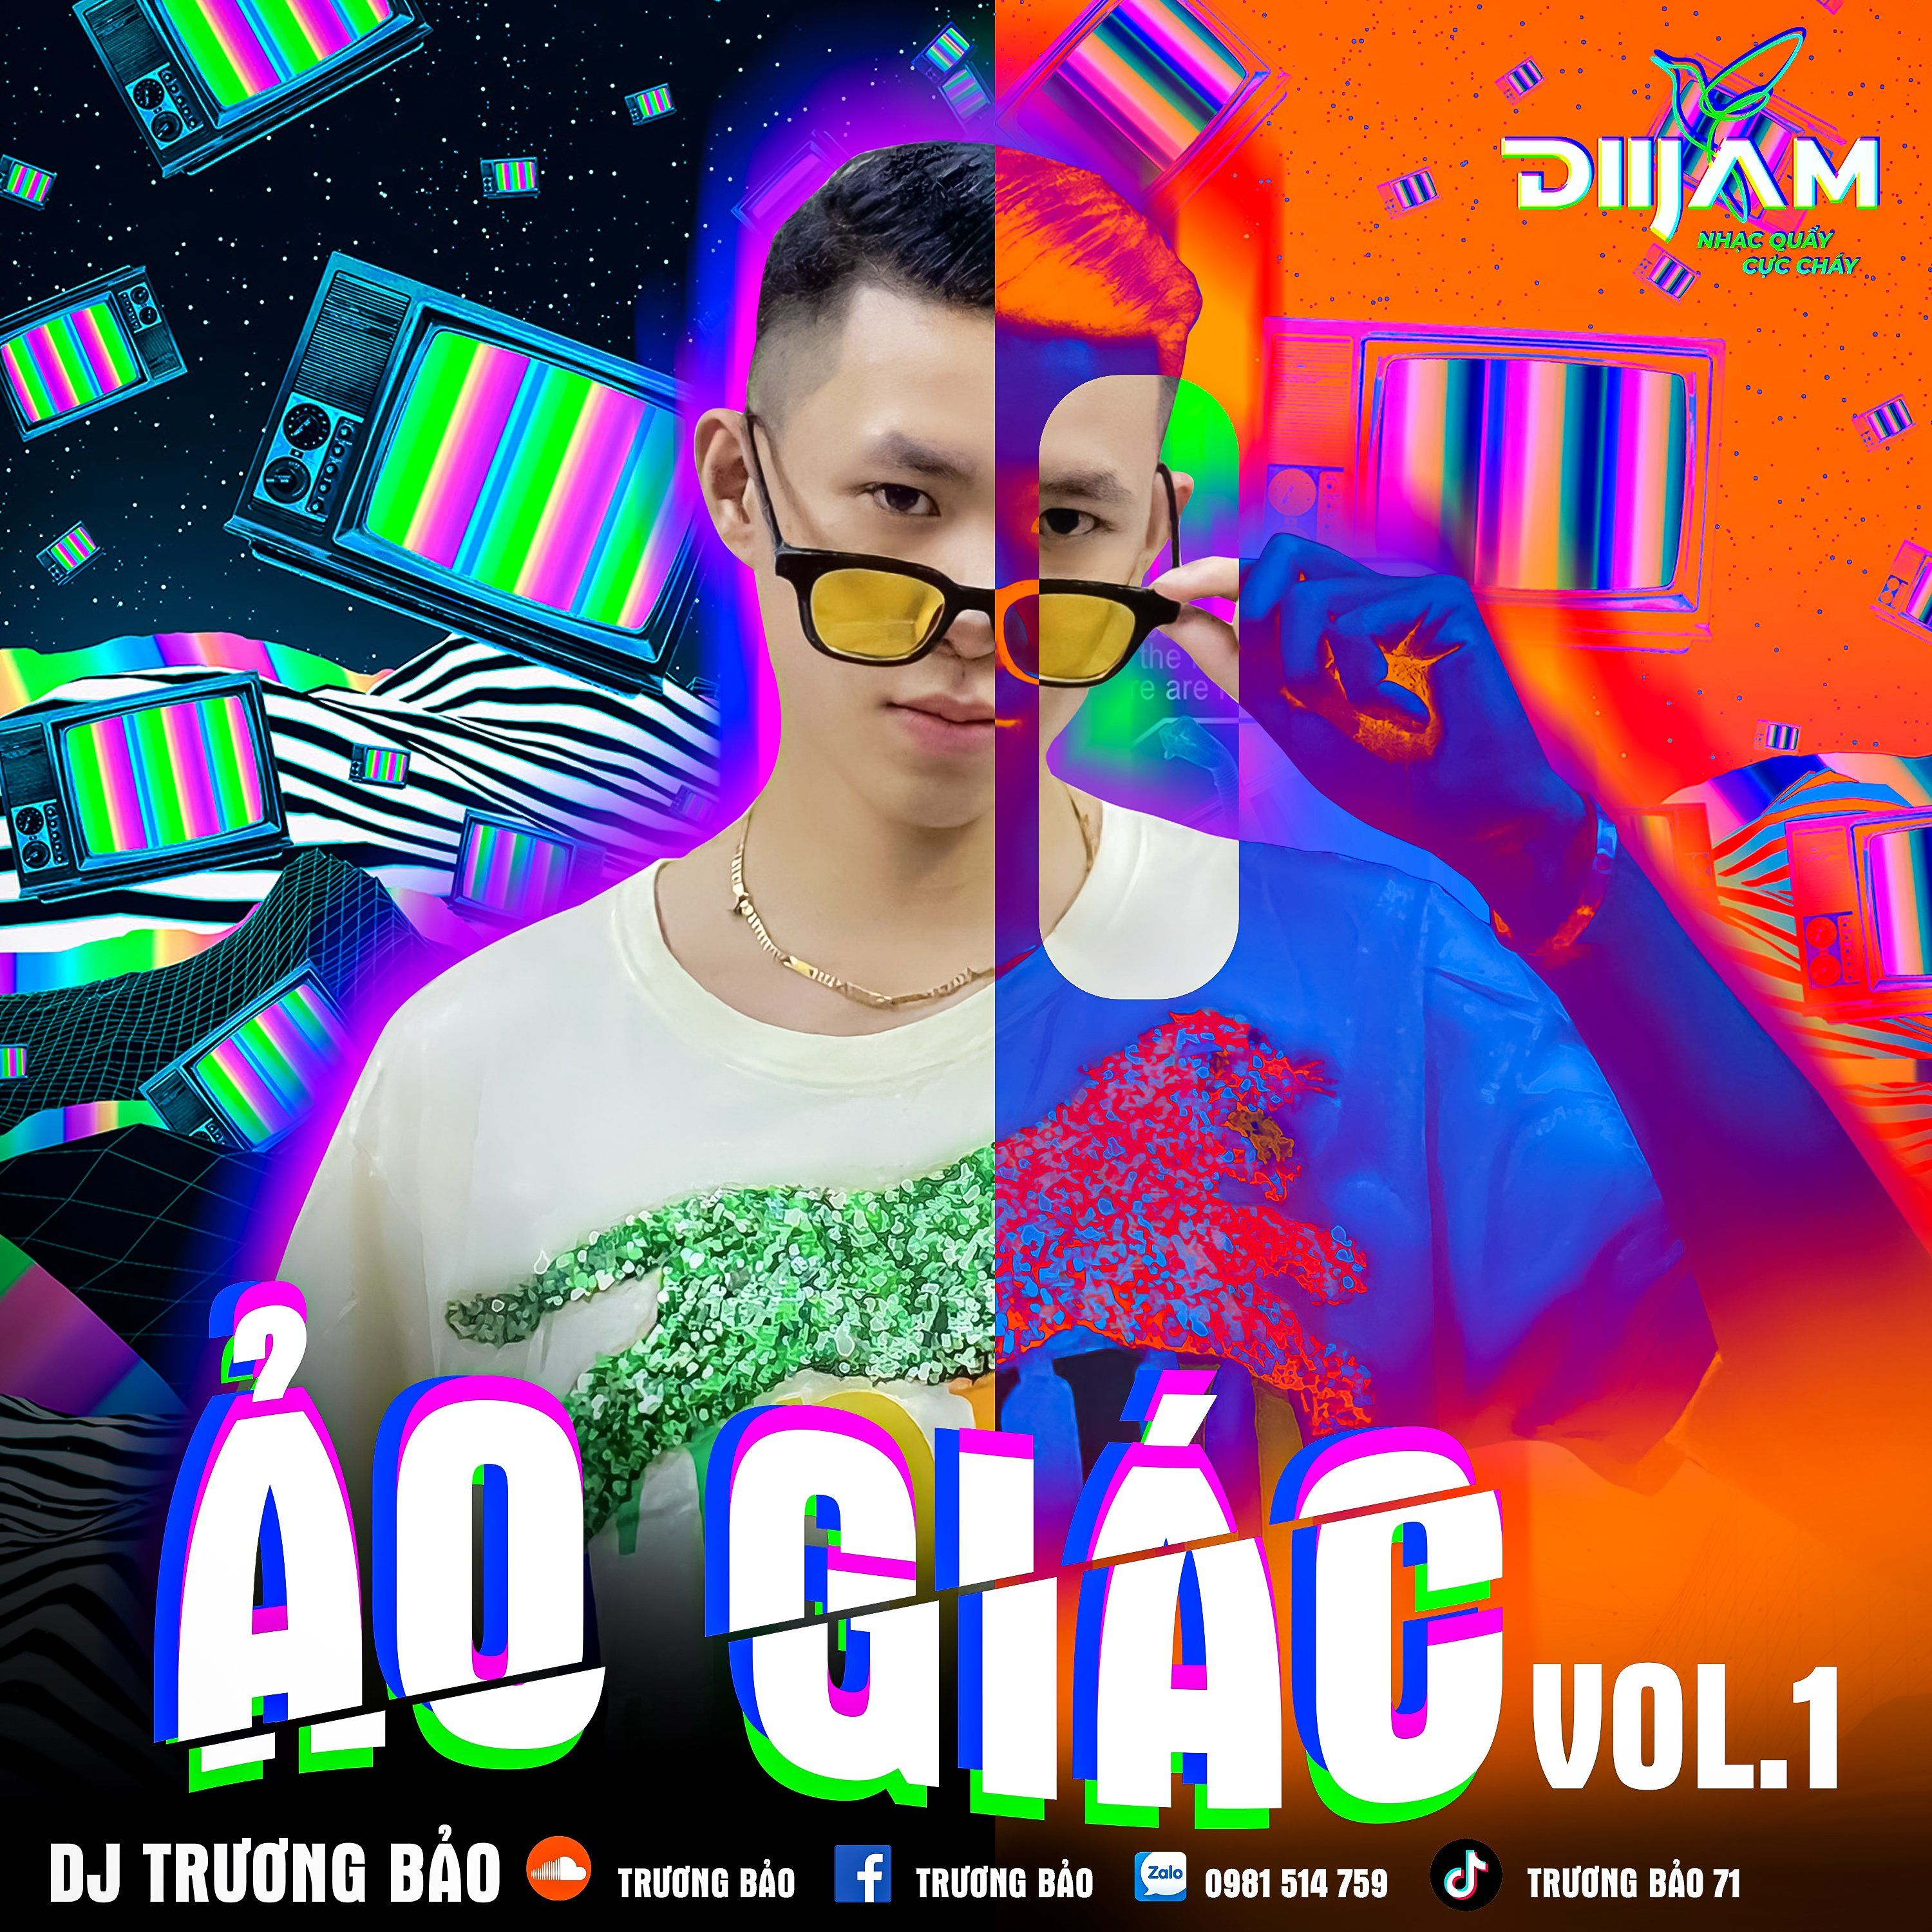 Soo dejiso Ảo Giác Vol 1 - DJ Trương Bảo (Nonstop Diijam)